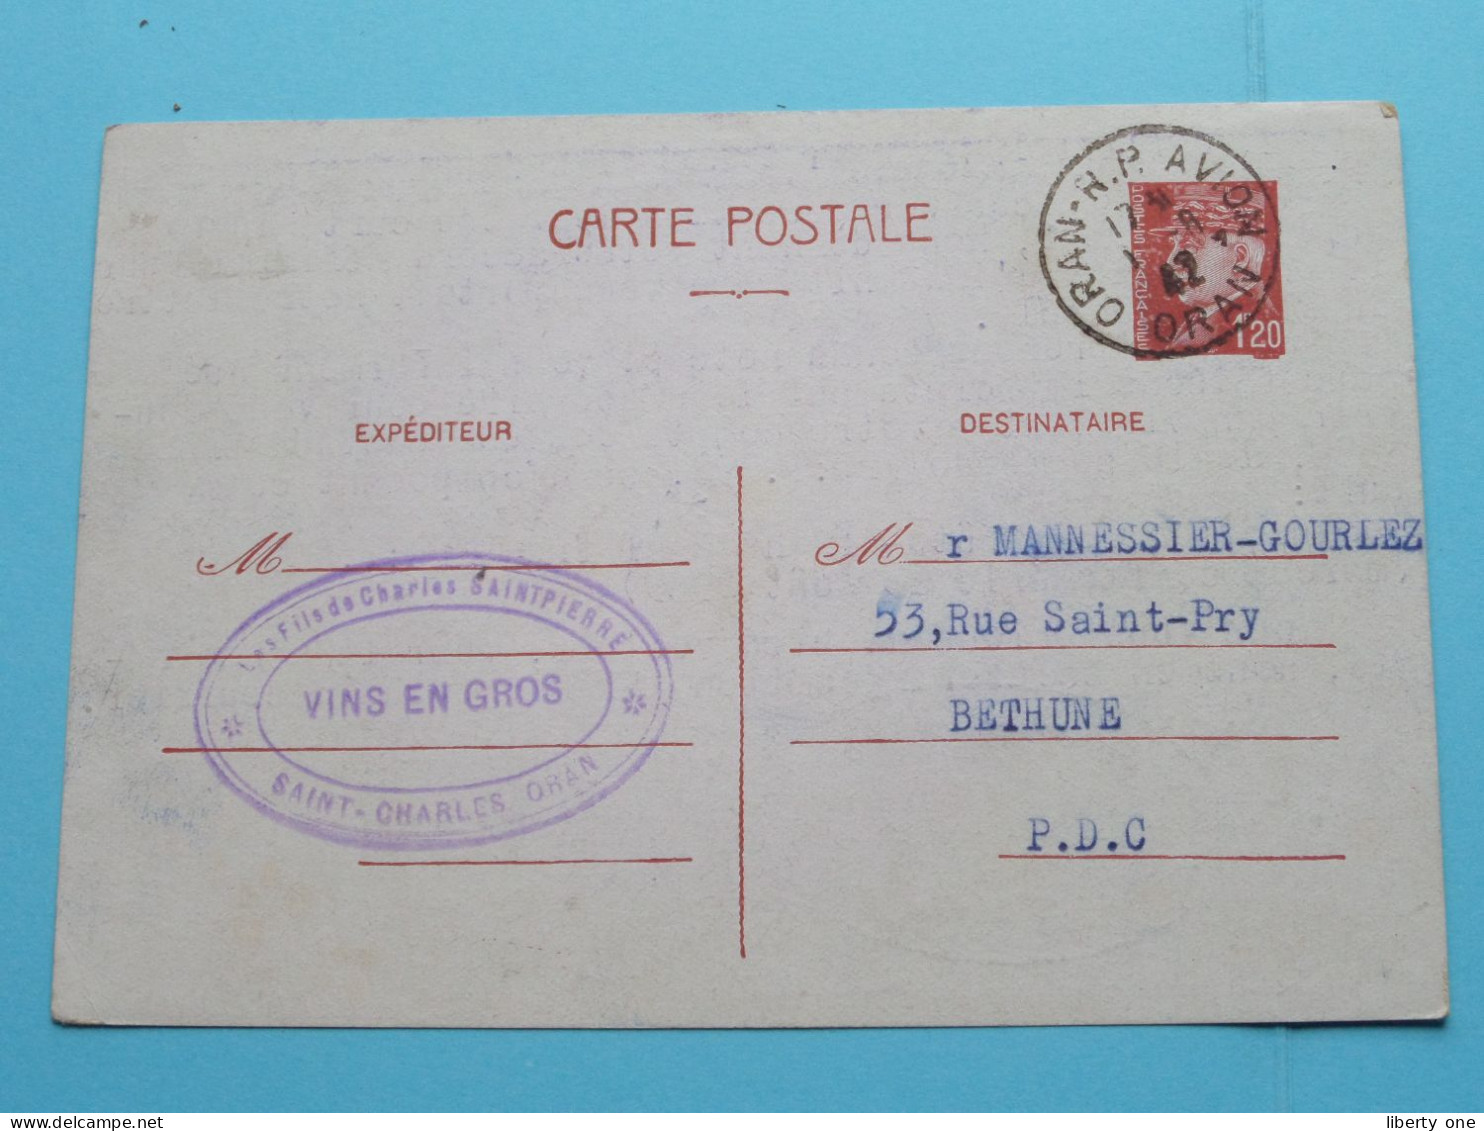 Les Filles Charles SAINTPIERRE > Saint-CHARLES ORAN France Anno 1942 ( Voir Scans ) ORDRE à Mannessier-Gourlez Bethune ! - Shopkeepers